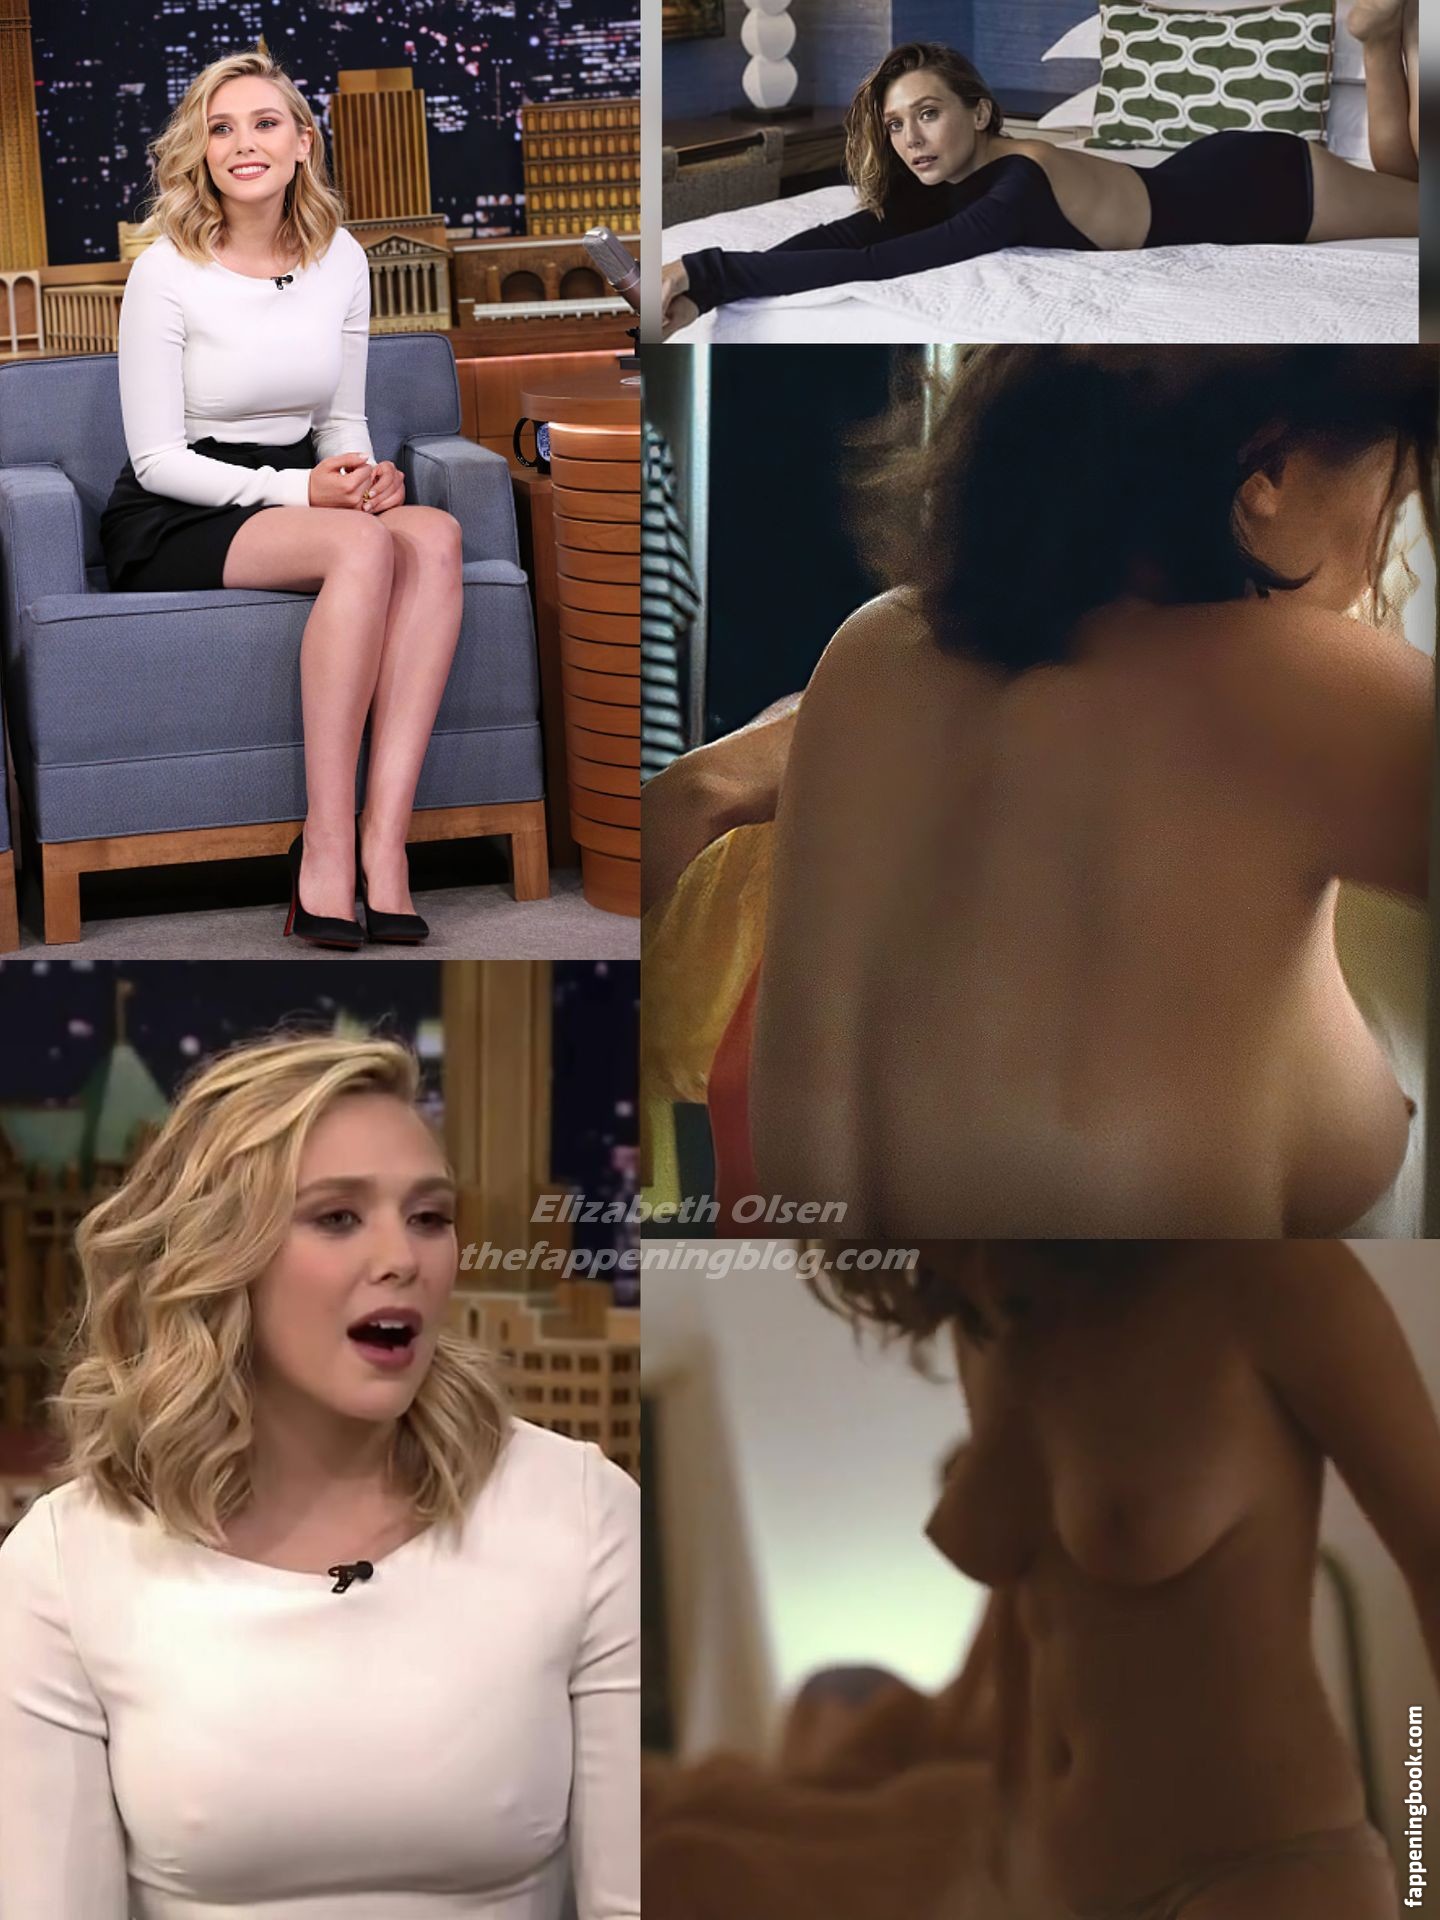 Jessica karr topless